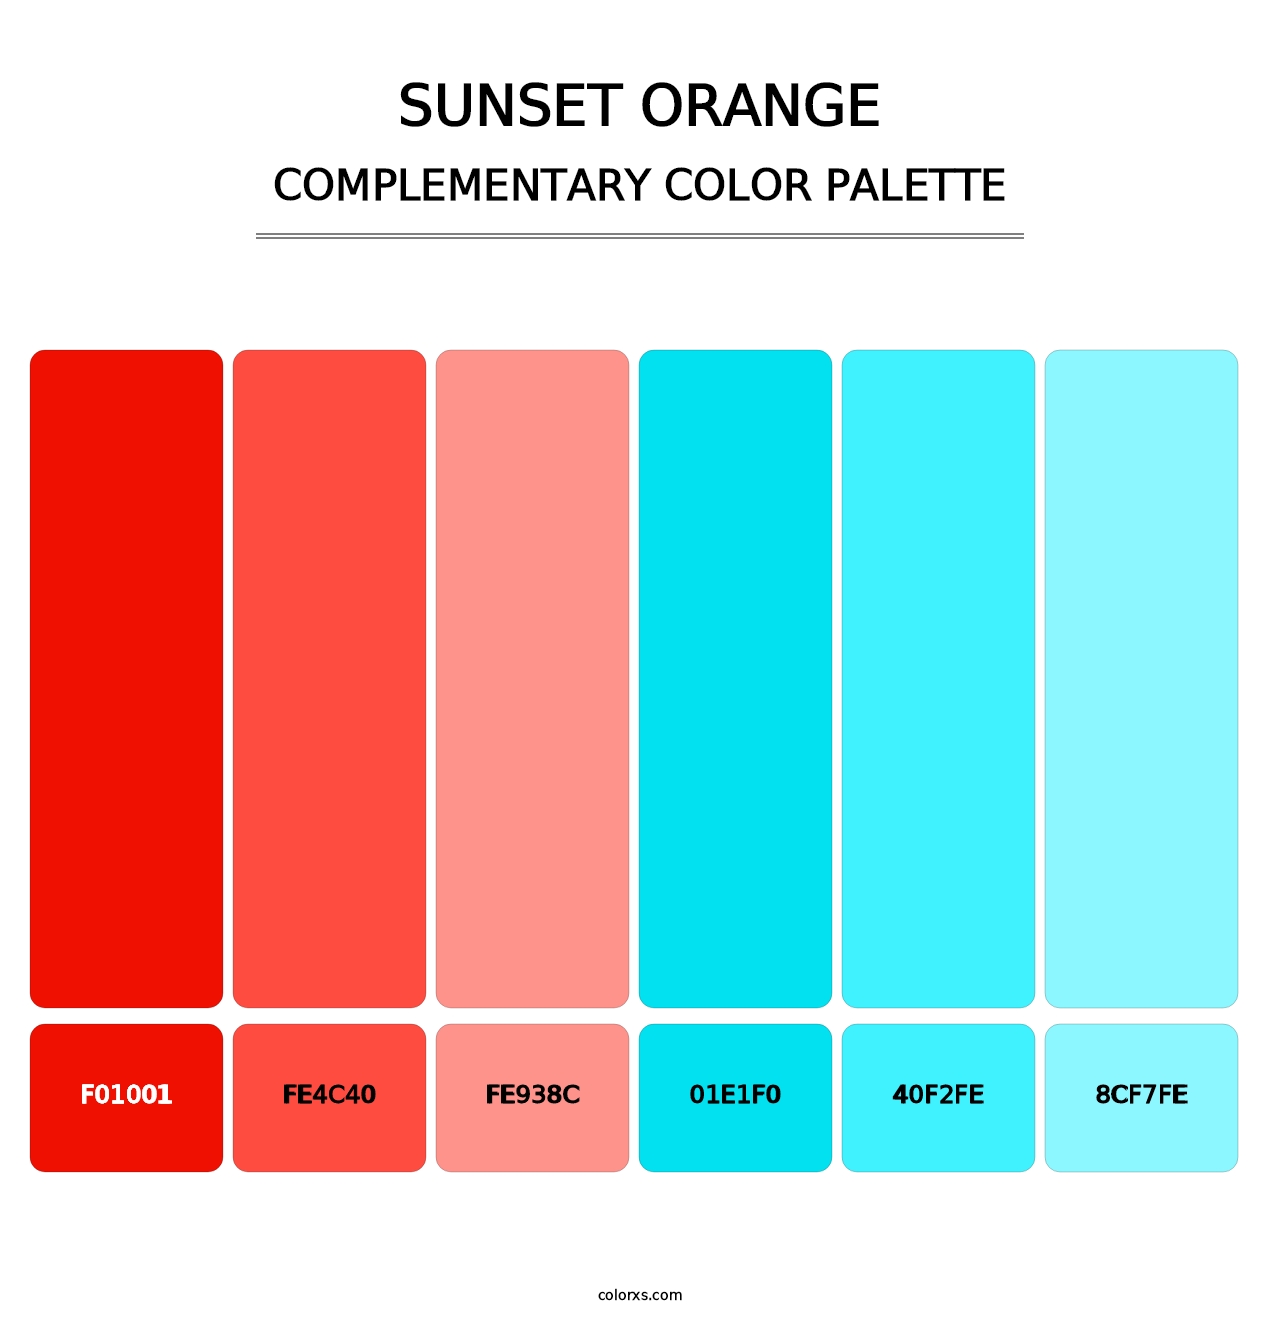 Sunset Orange - Complementary Color Palette